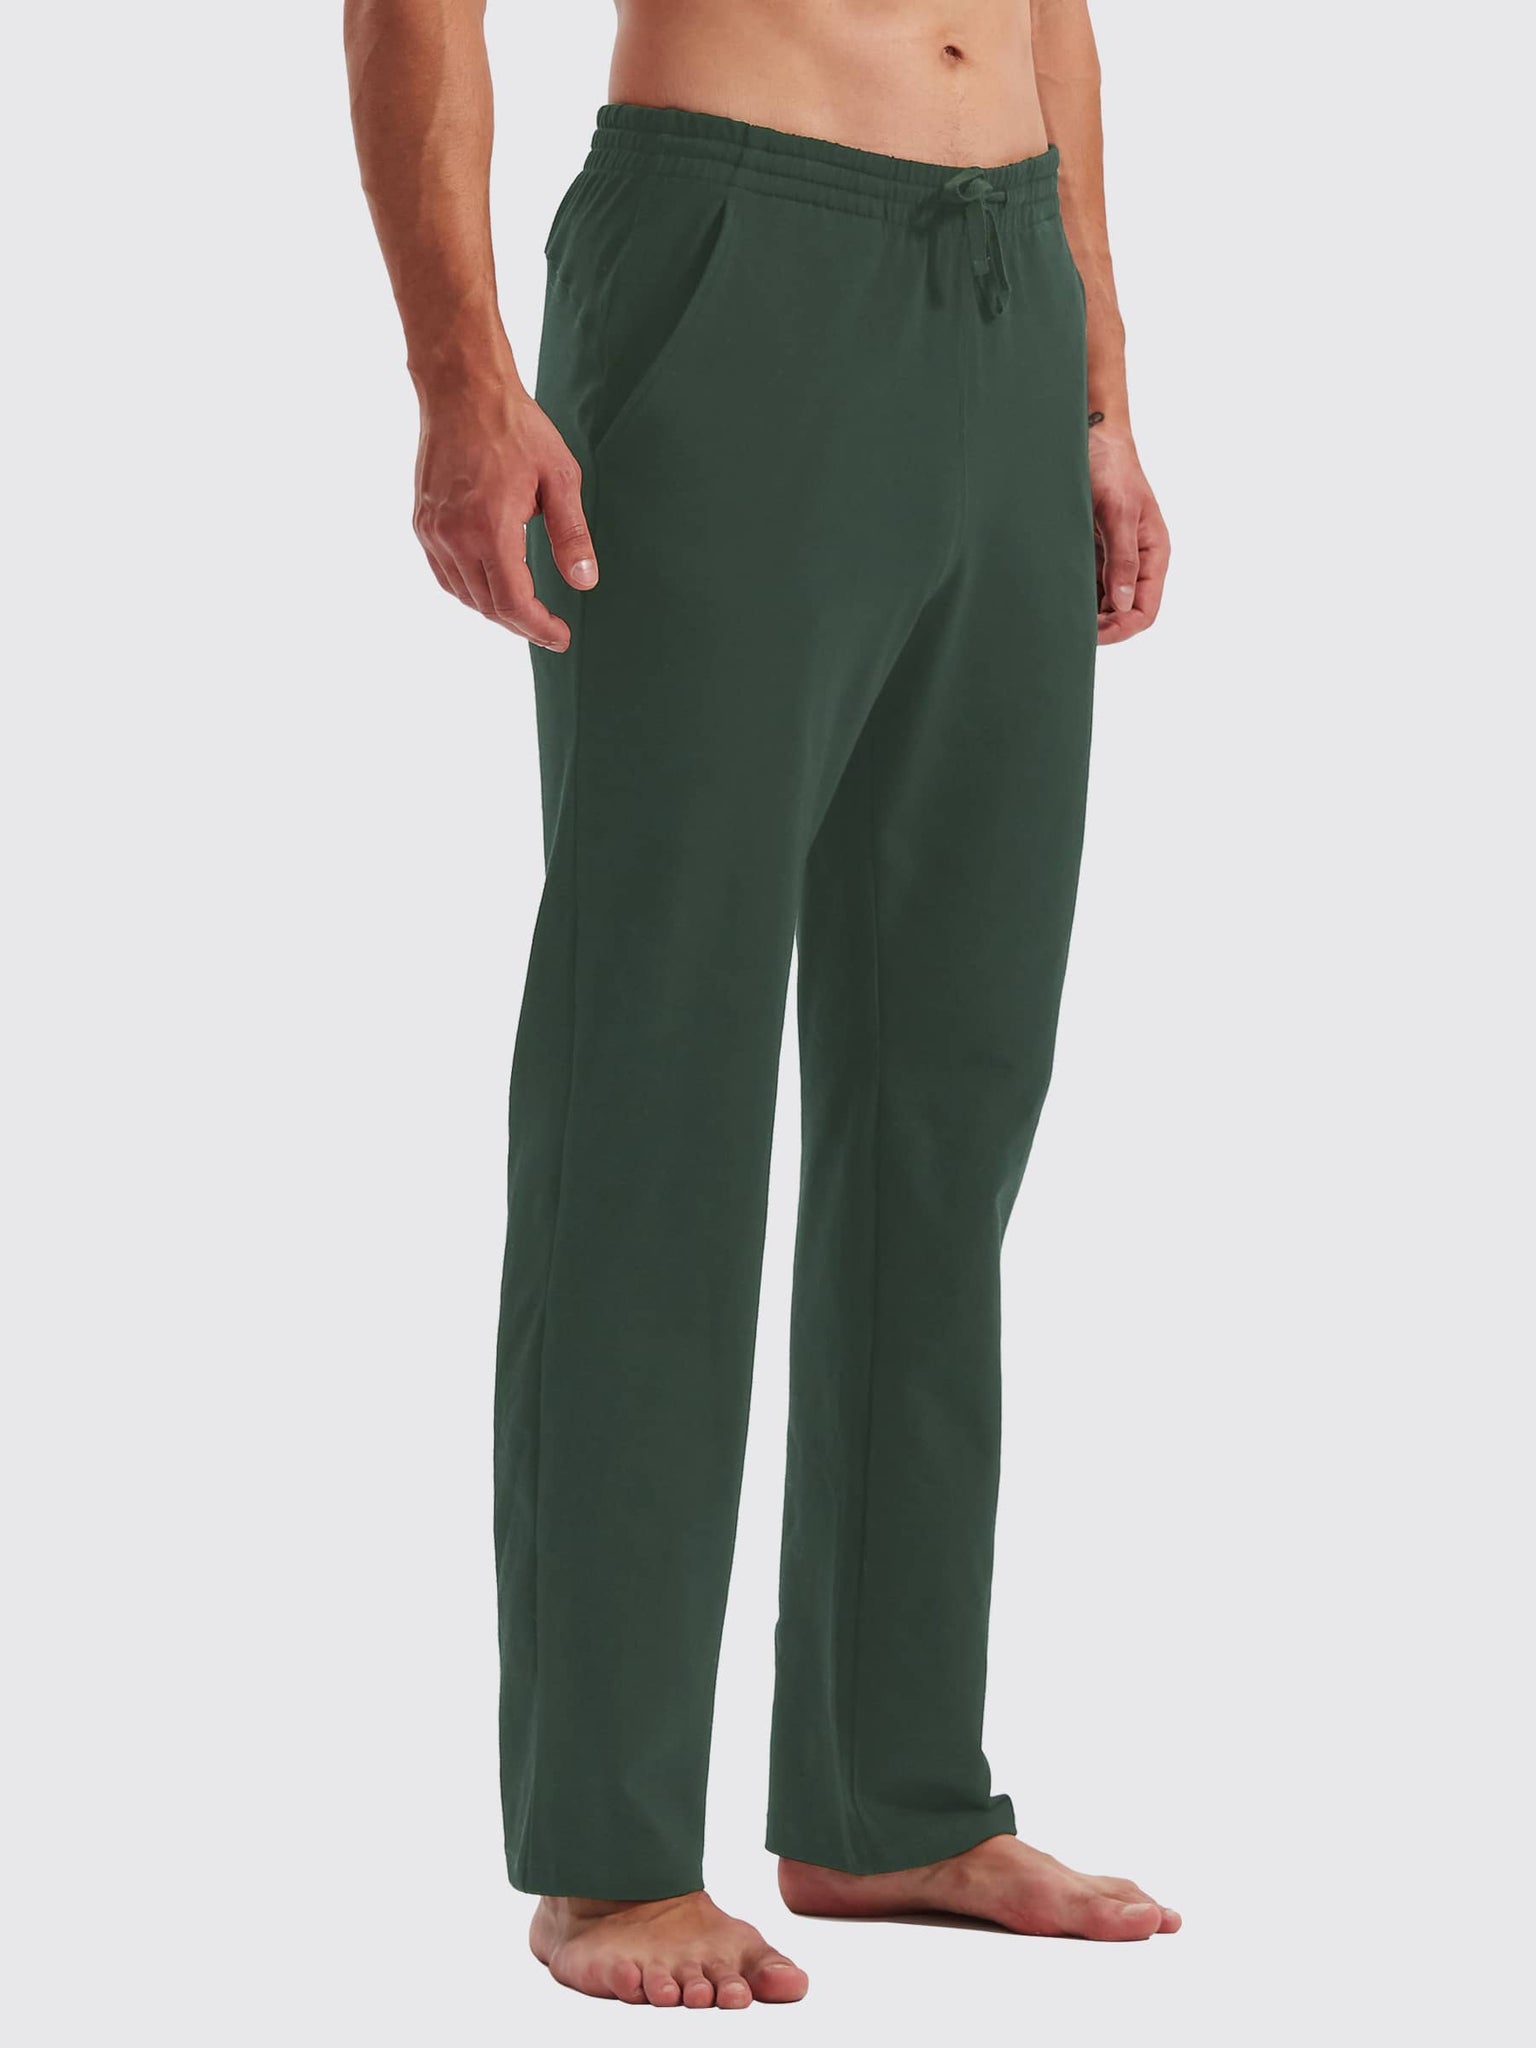 Men's Cotton Yoga Balance Sweatpants_Green_model3